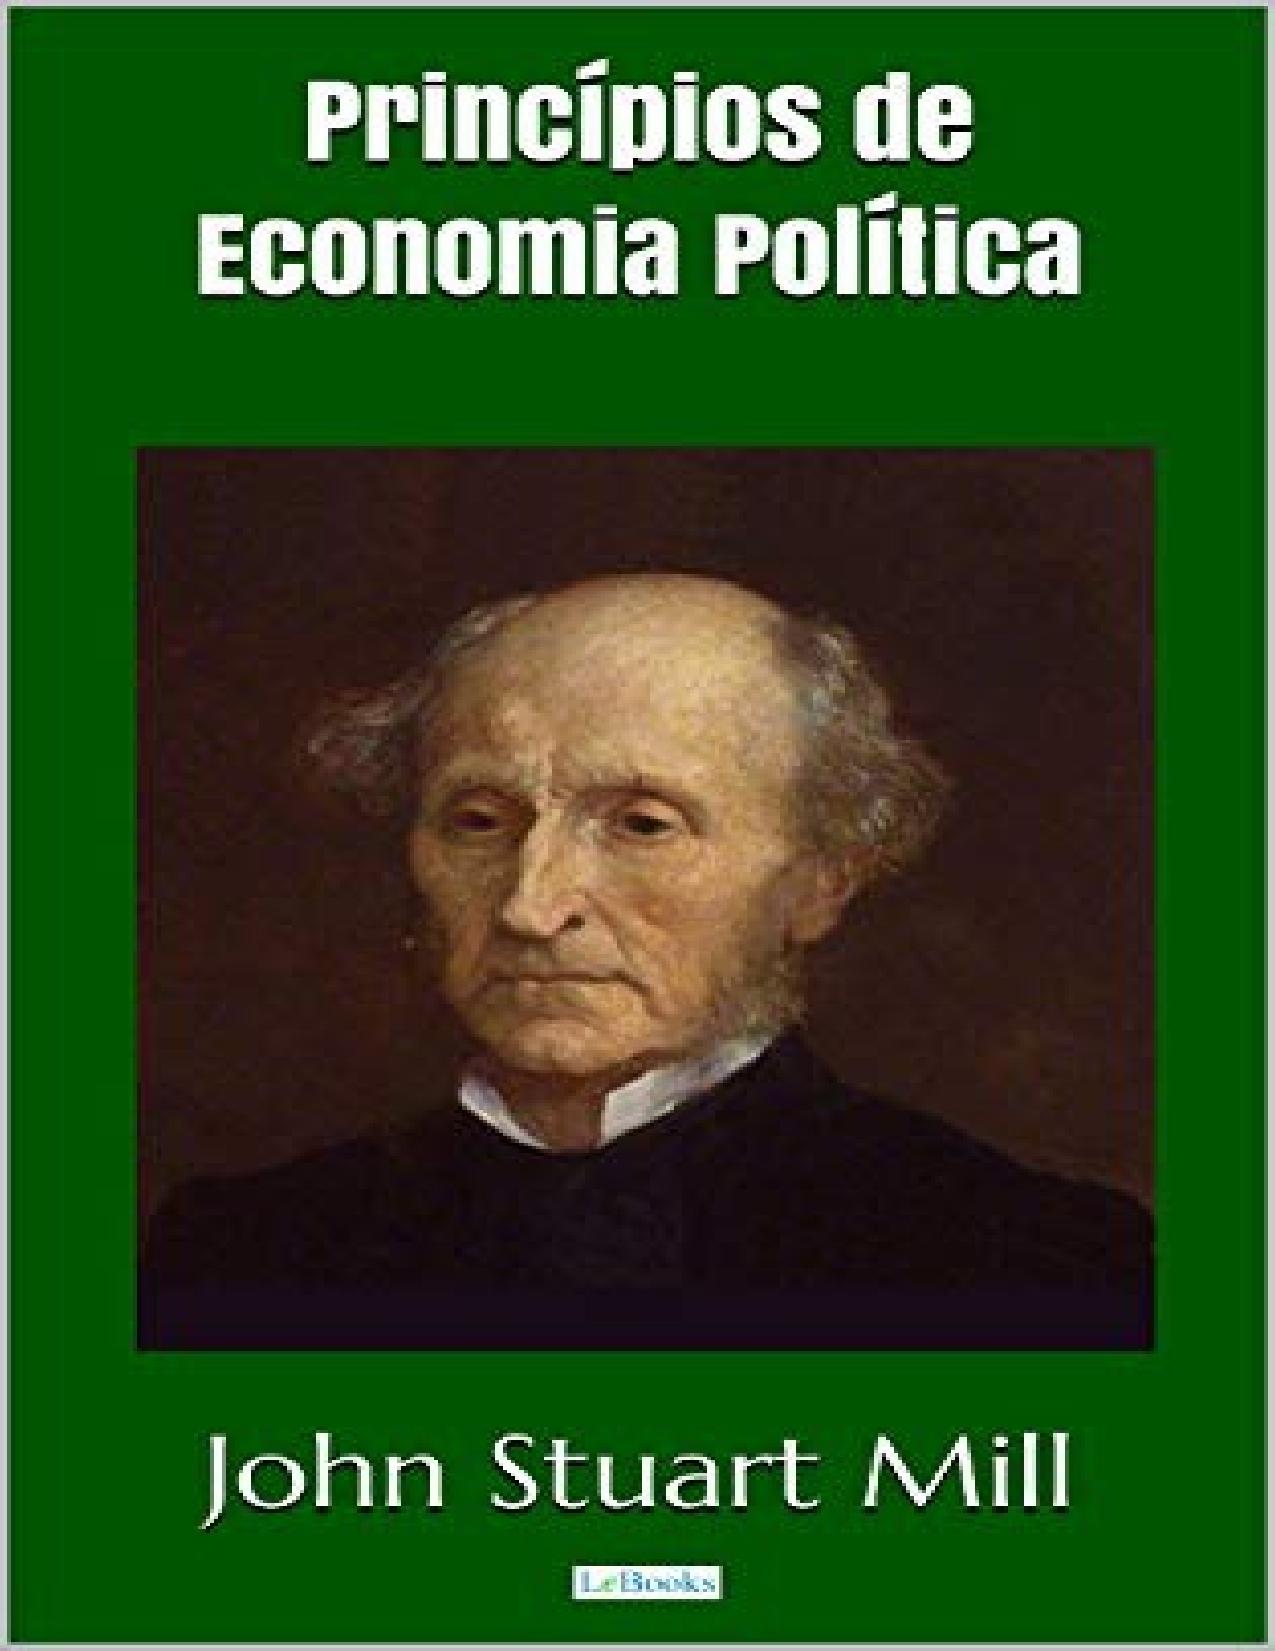 John Stuart Mill by Princípios de Economia Política